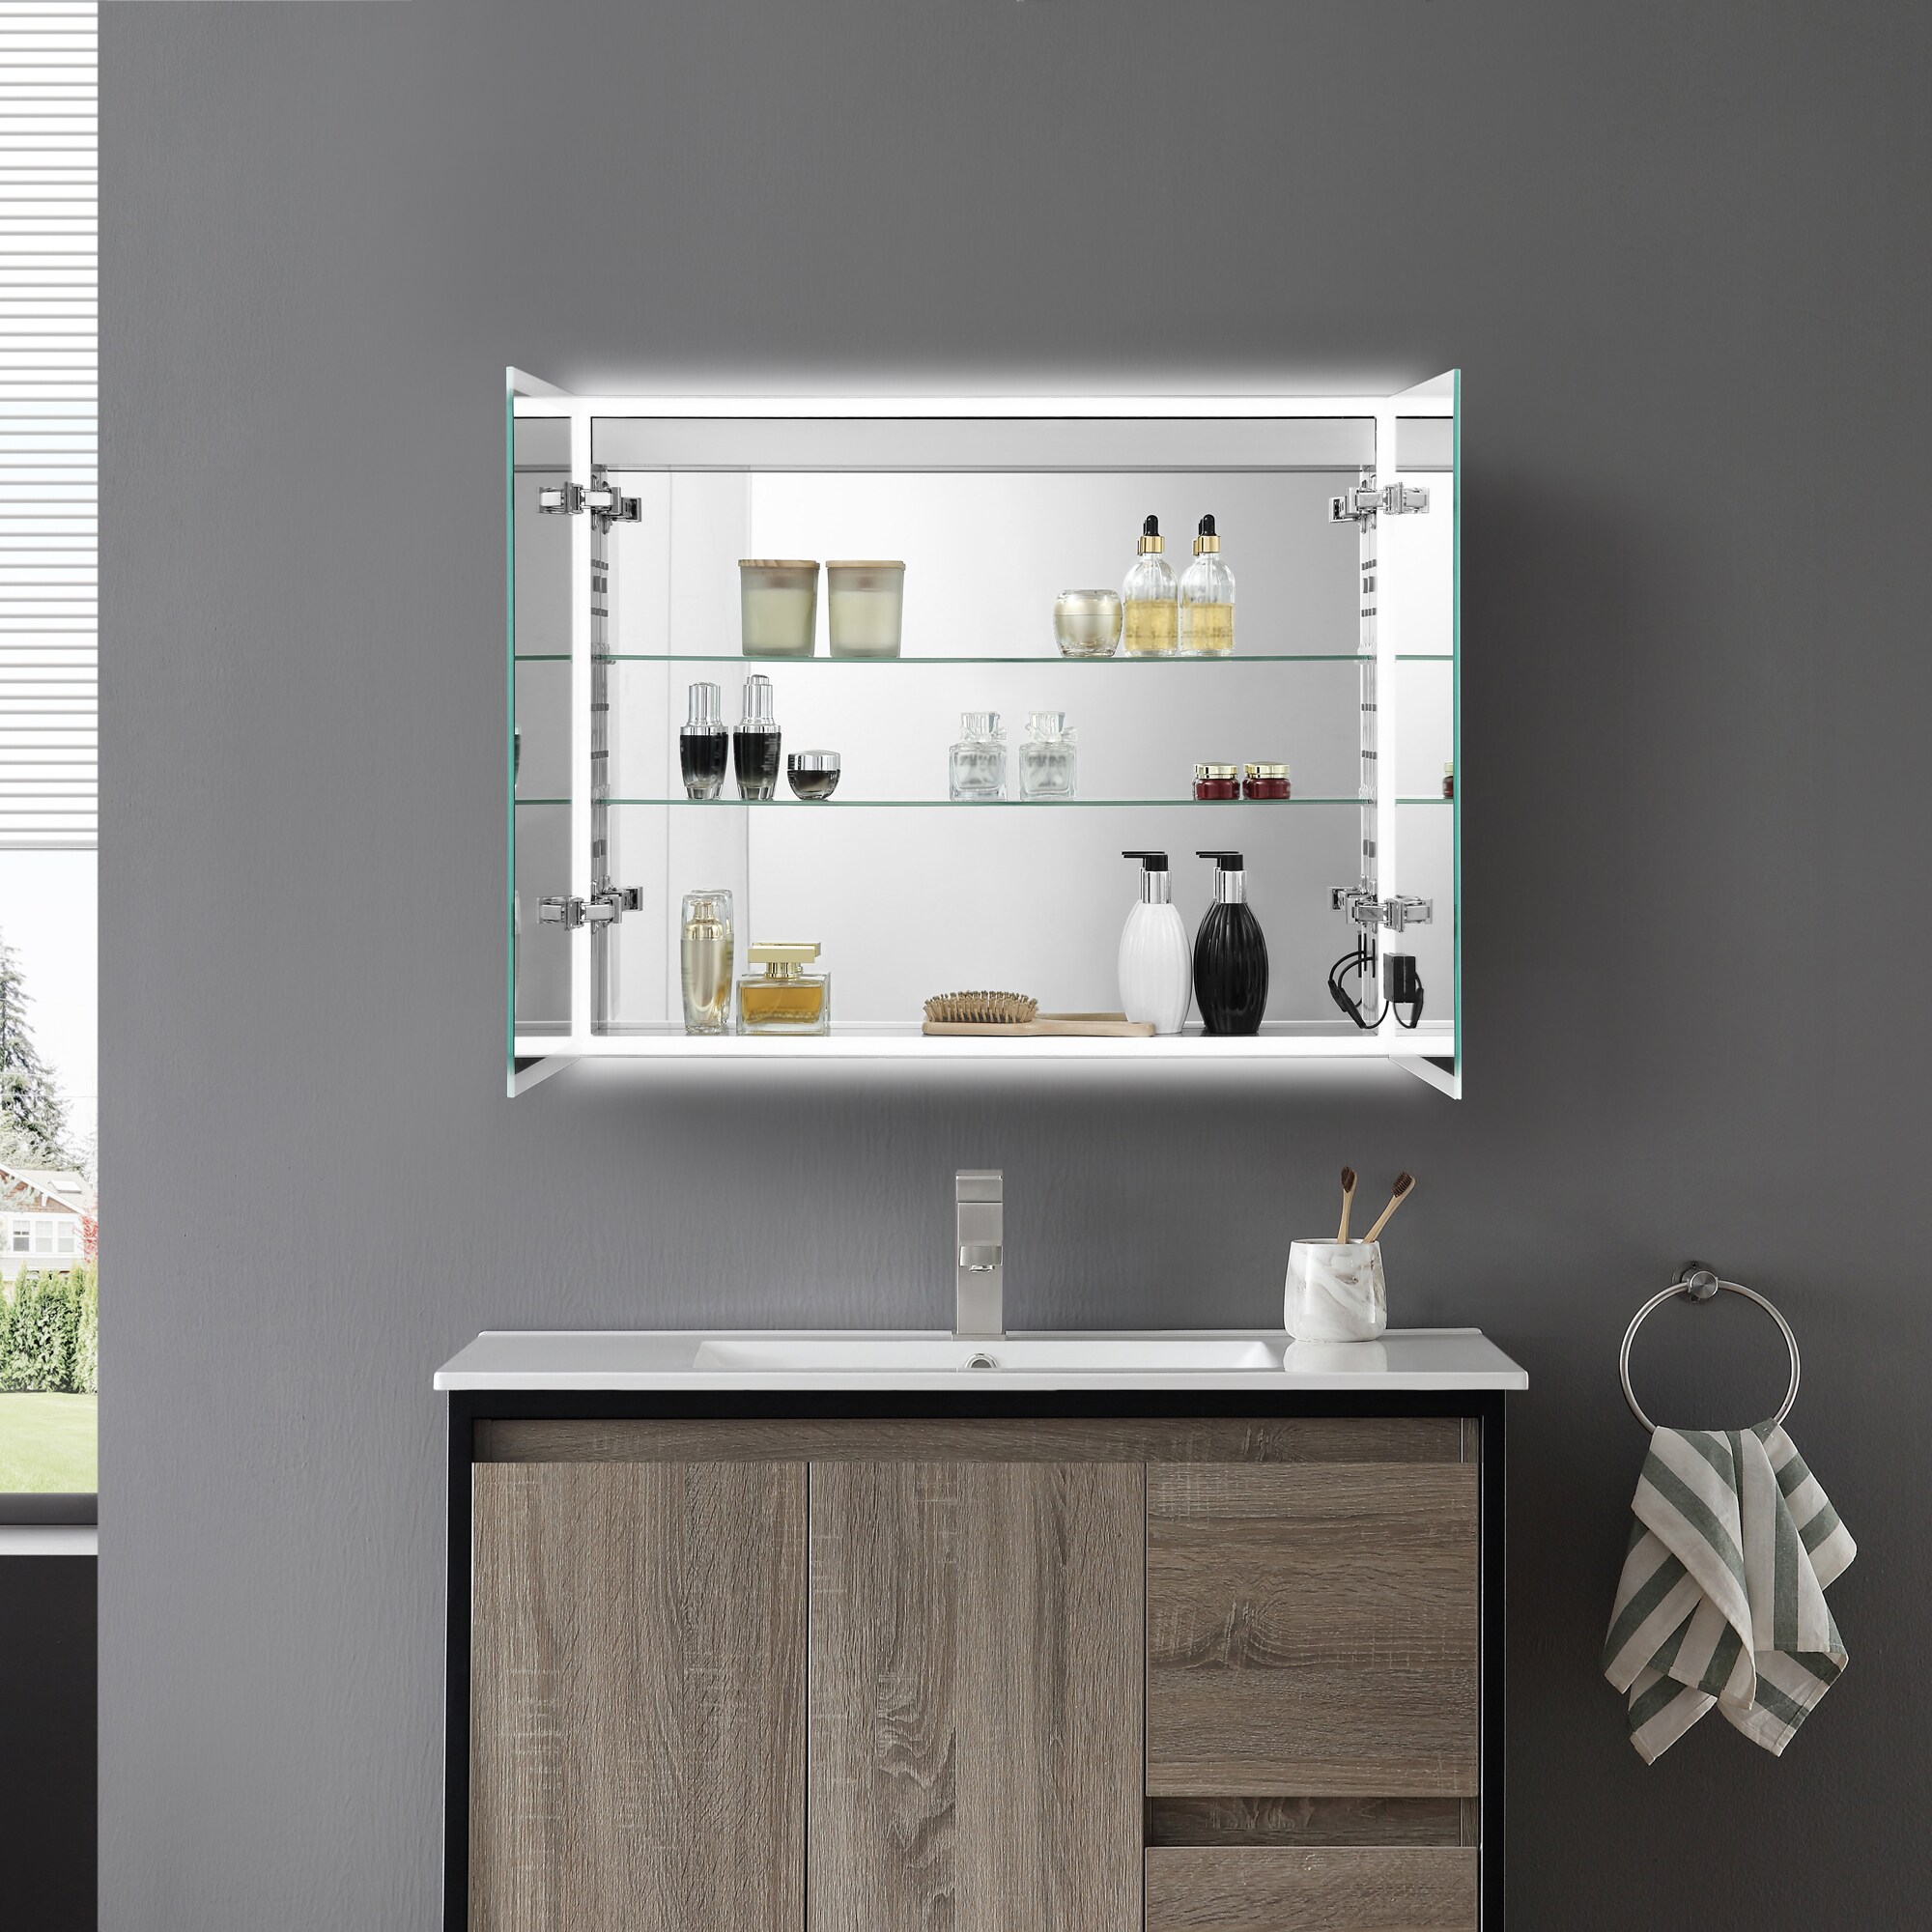 bathroom sliding mirror cabinet